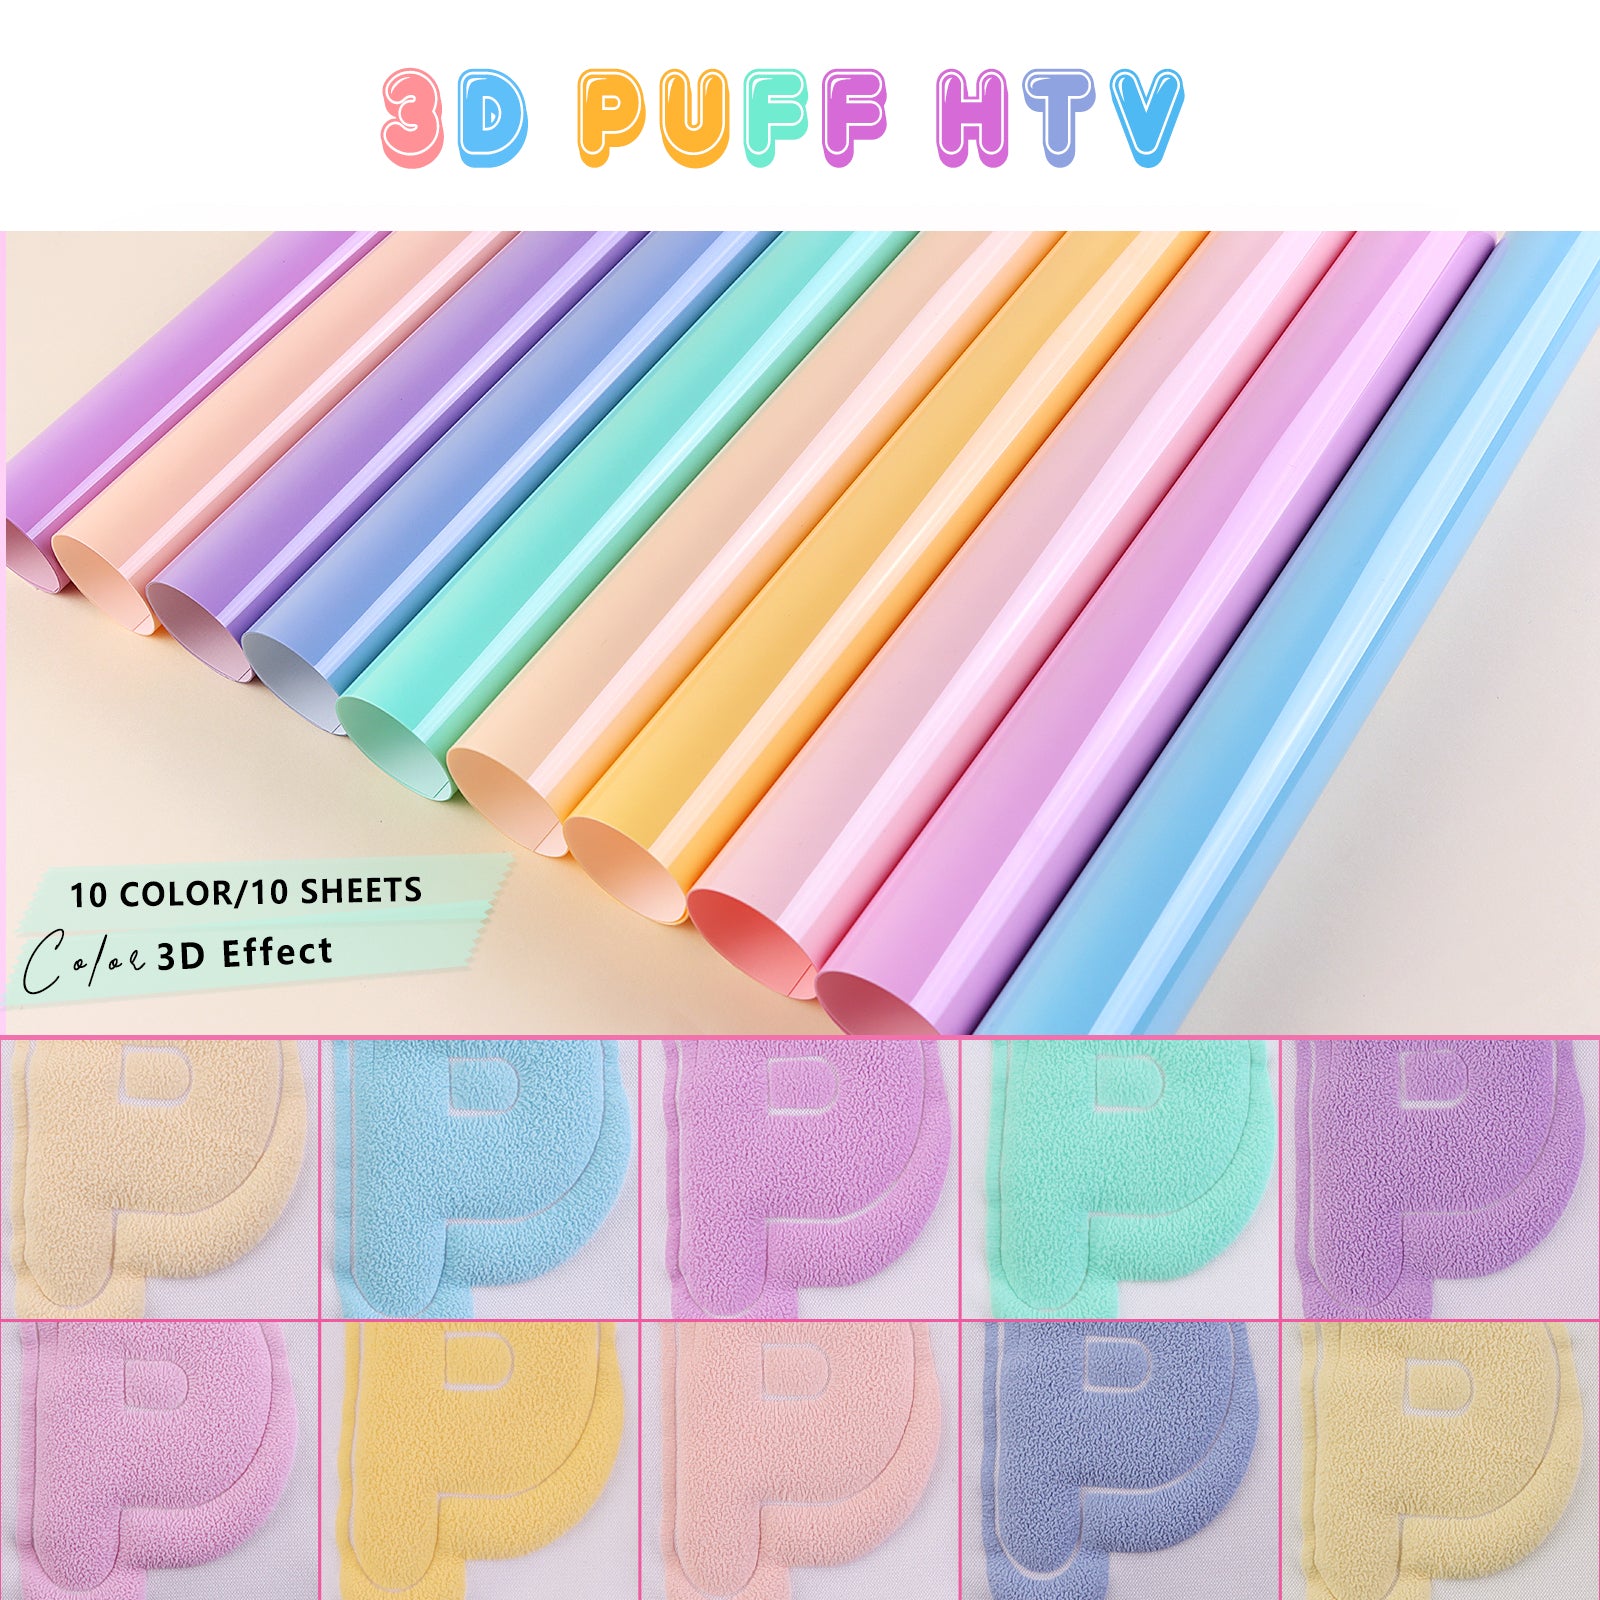 Tintnut Puff Vinyl Heat Transfer - 30 Sheets 12 x 10inches 3D Puff HTV –  tintnut